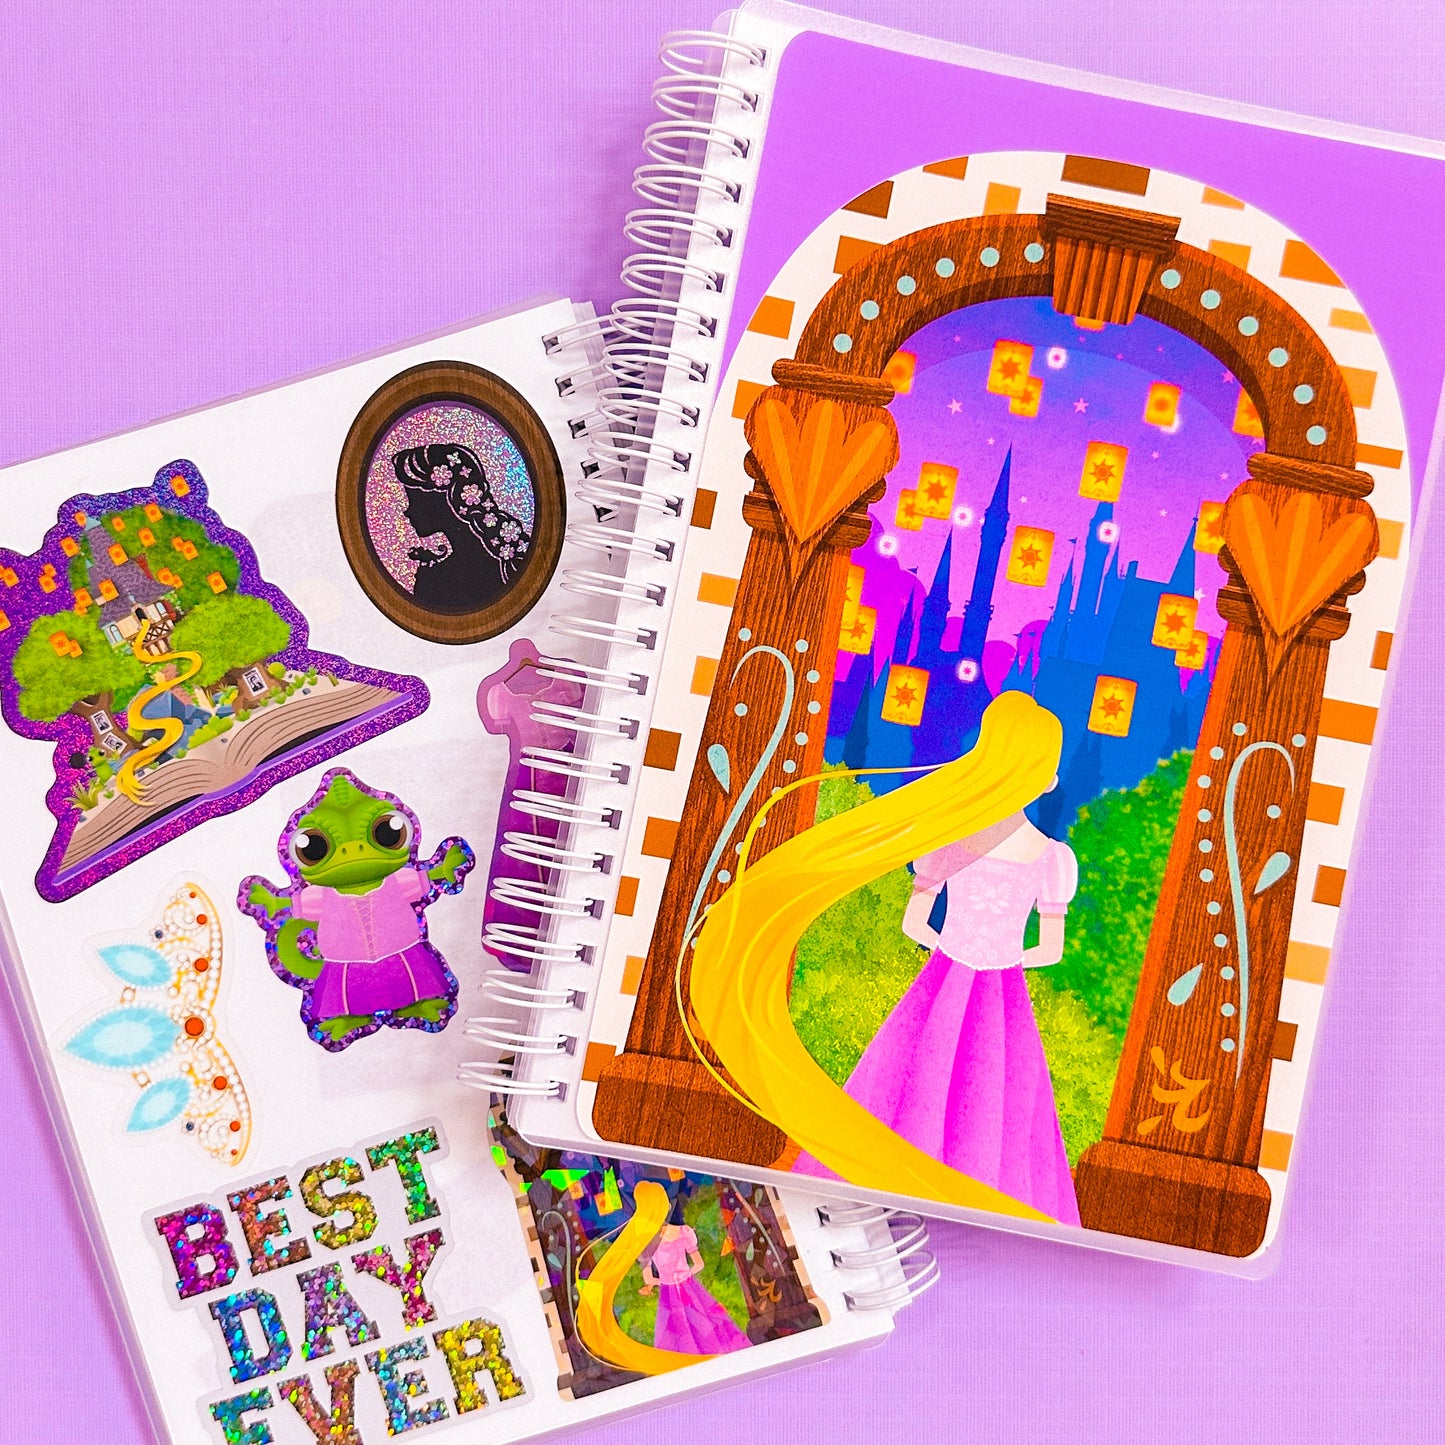 Glitter Waterproof Sticker - Princess Profile (Rapunzel)